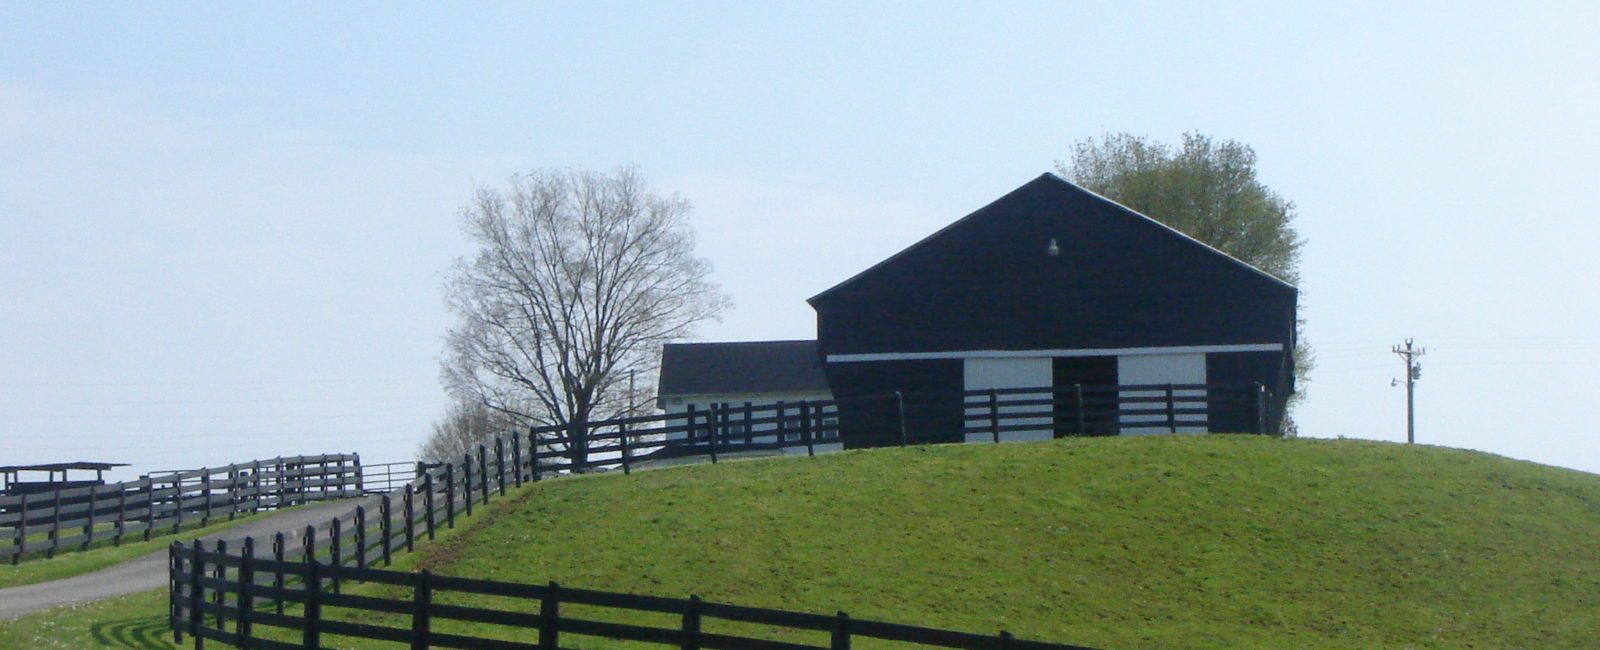 Barn, Black Angus Farm